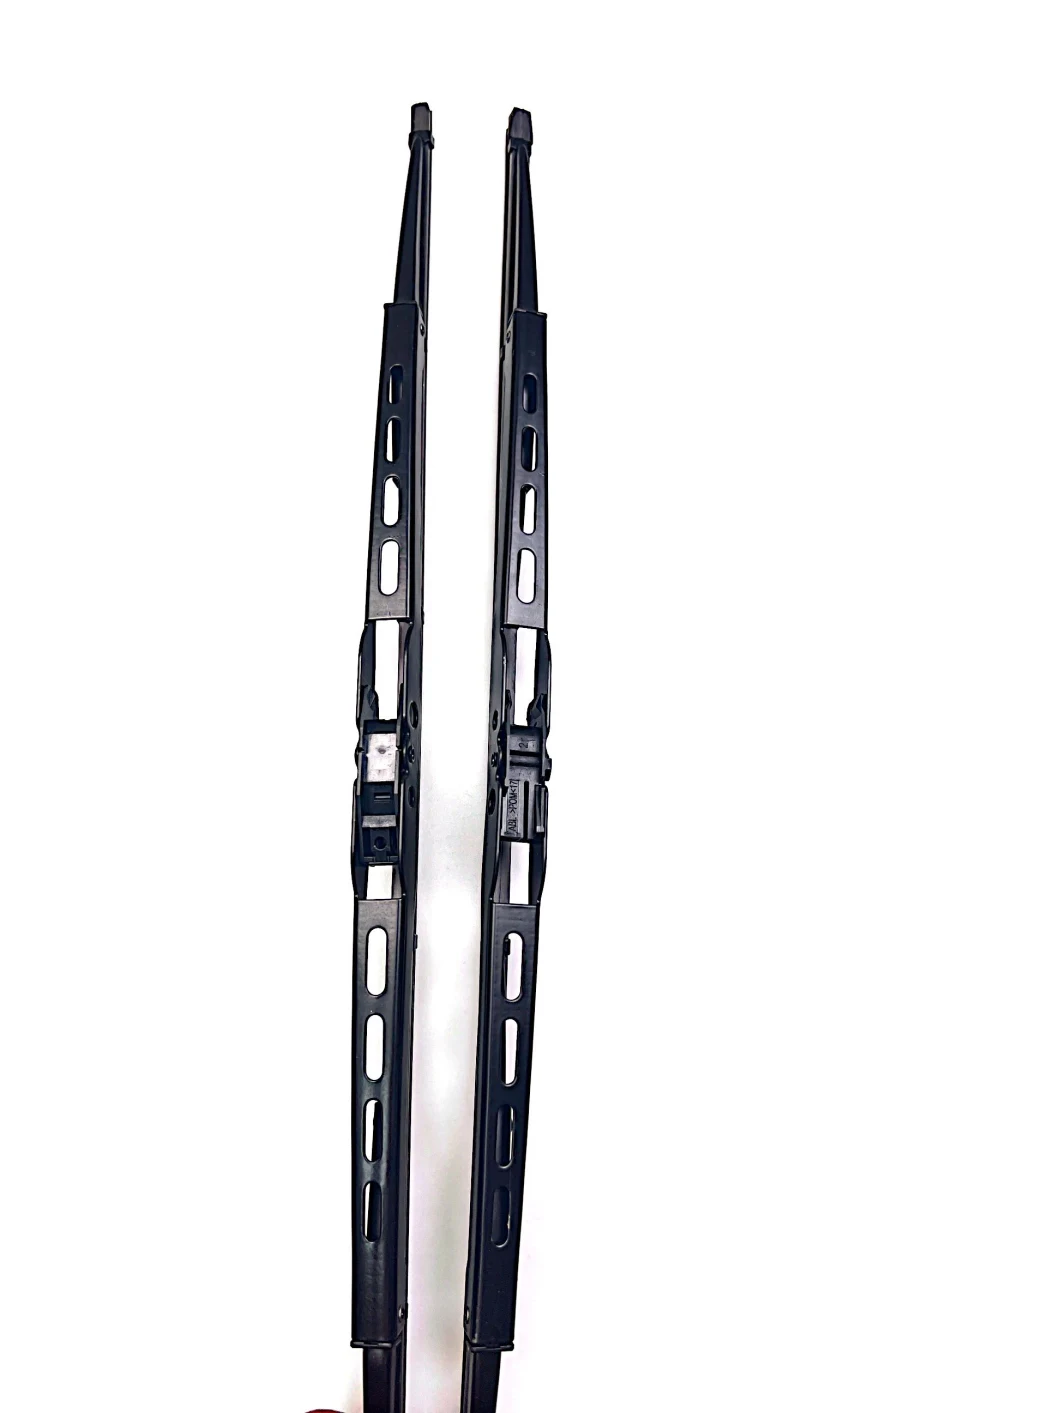 2PCS Traditional Metal Frame U Hook Type Windshield Wiper Blade